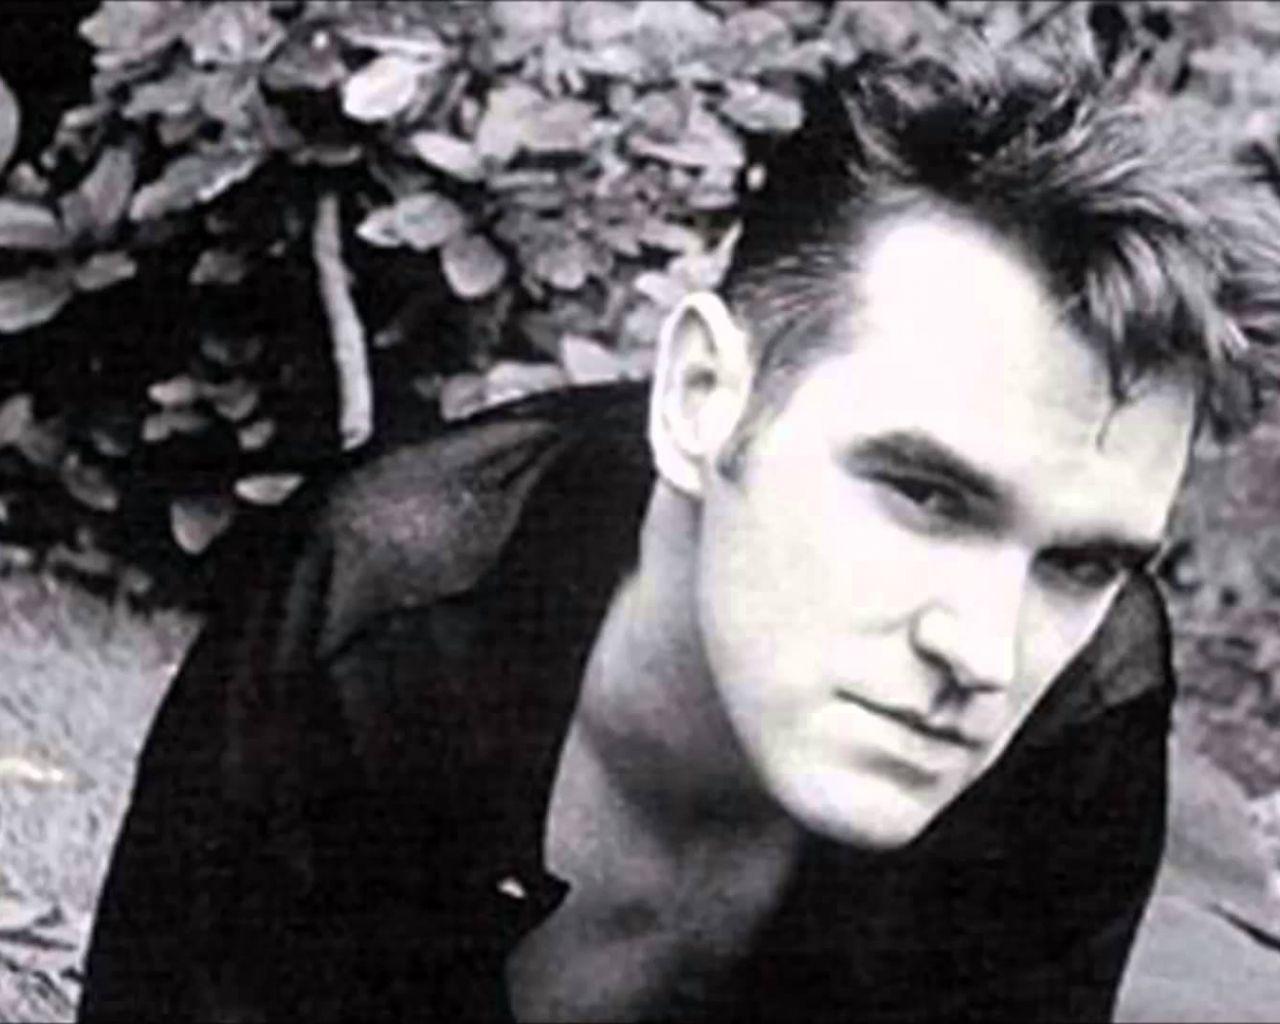 Smiths drummer Mike Joyce shuns Morrissey's memoir | Music | The Guardian